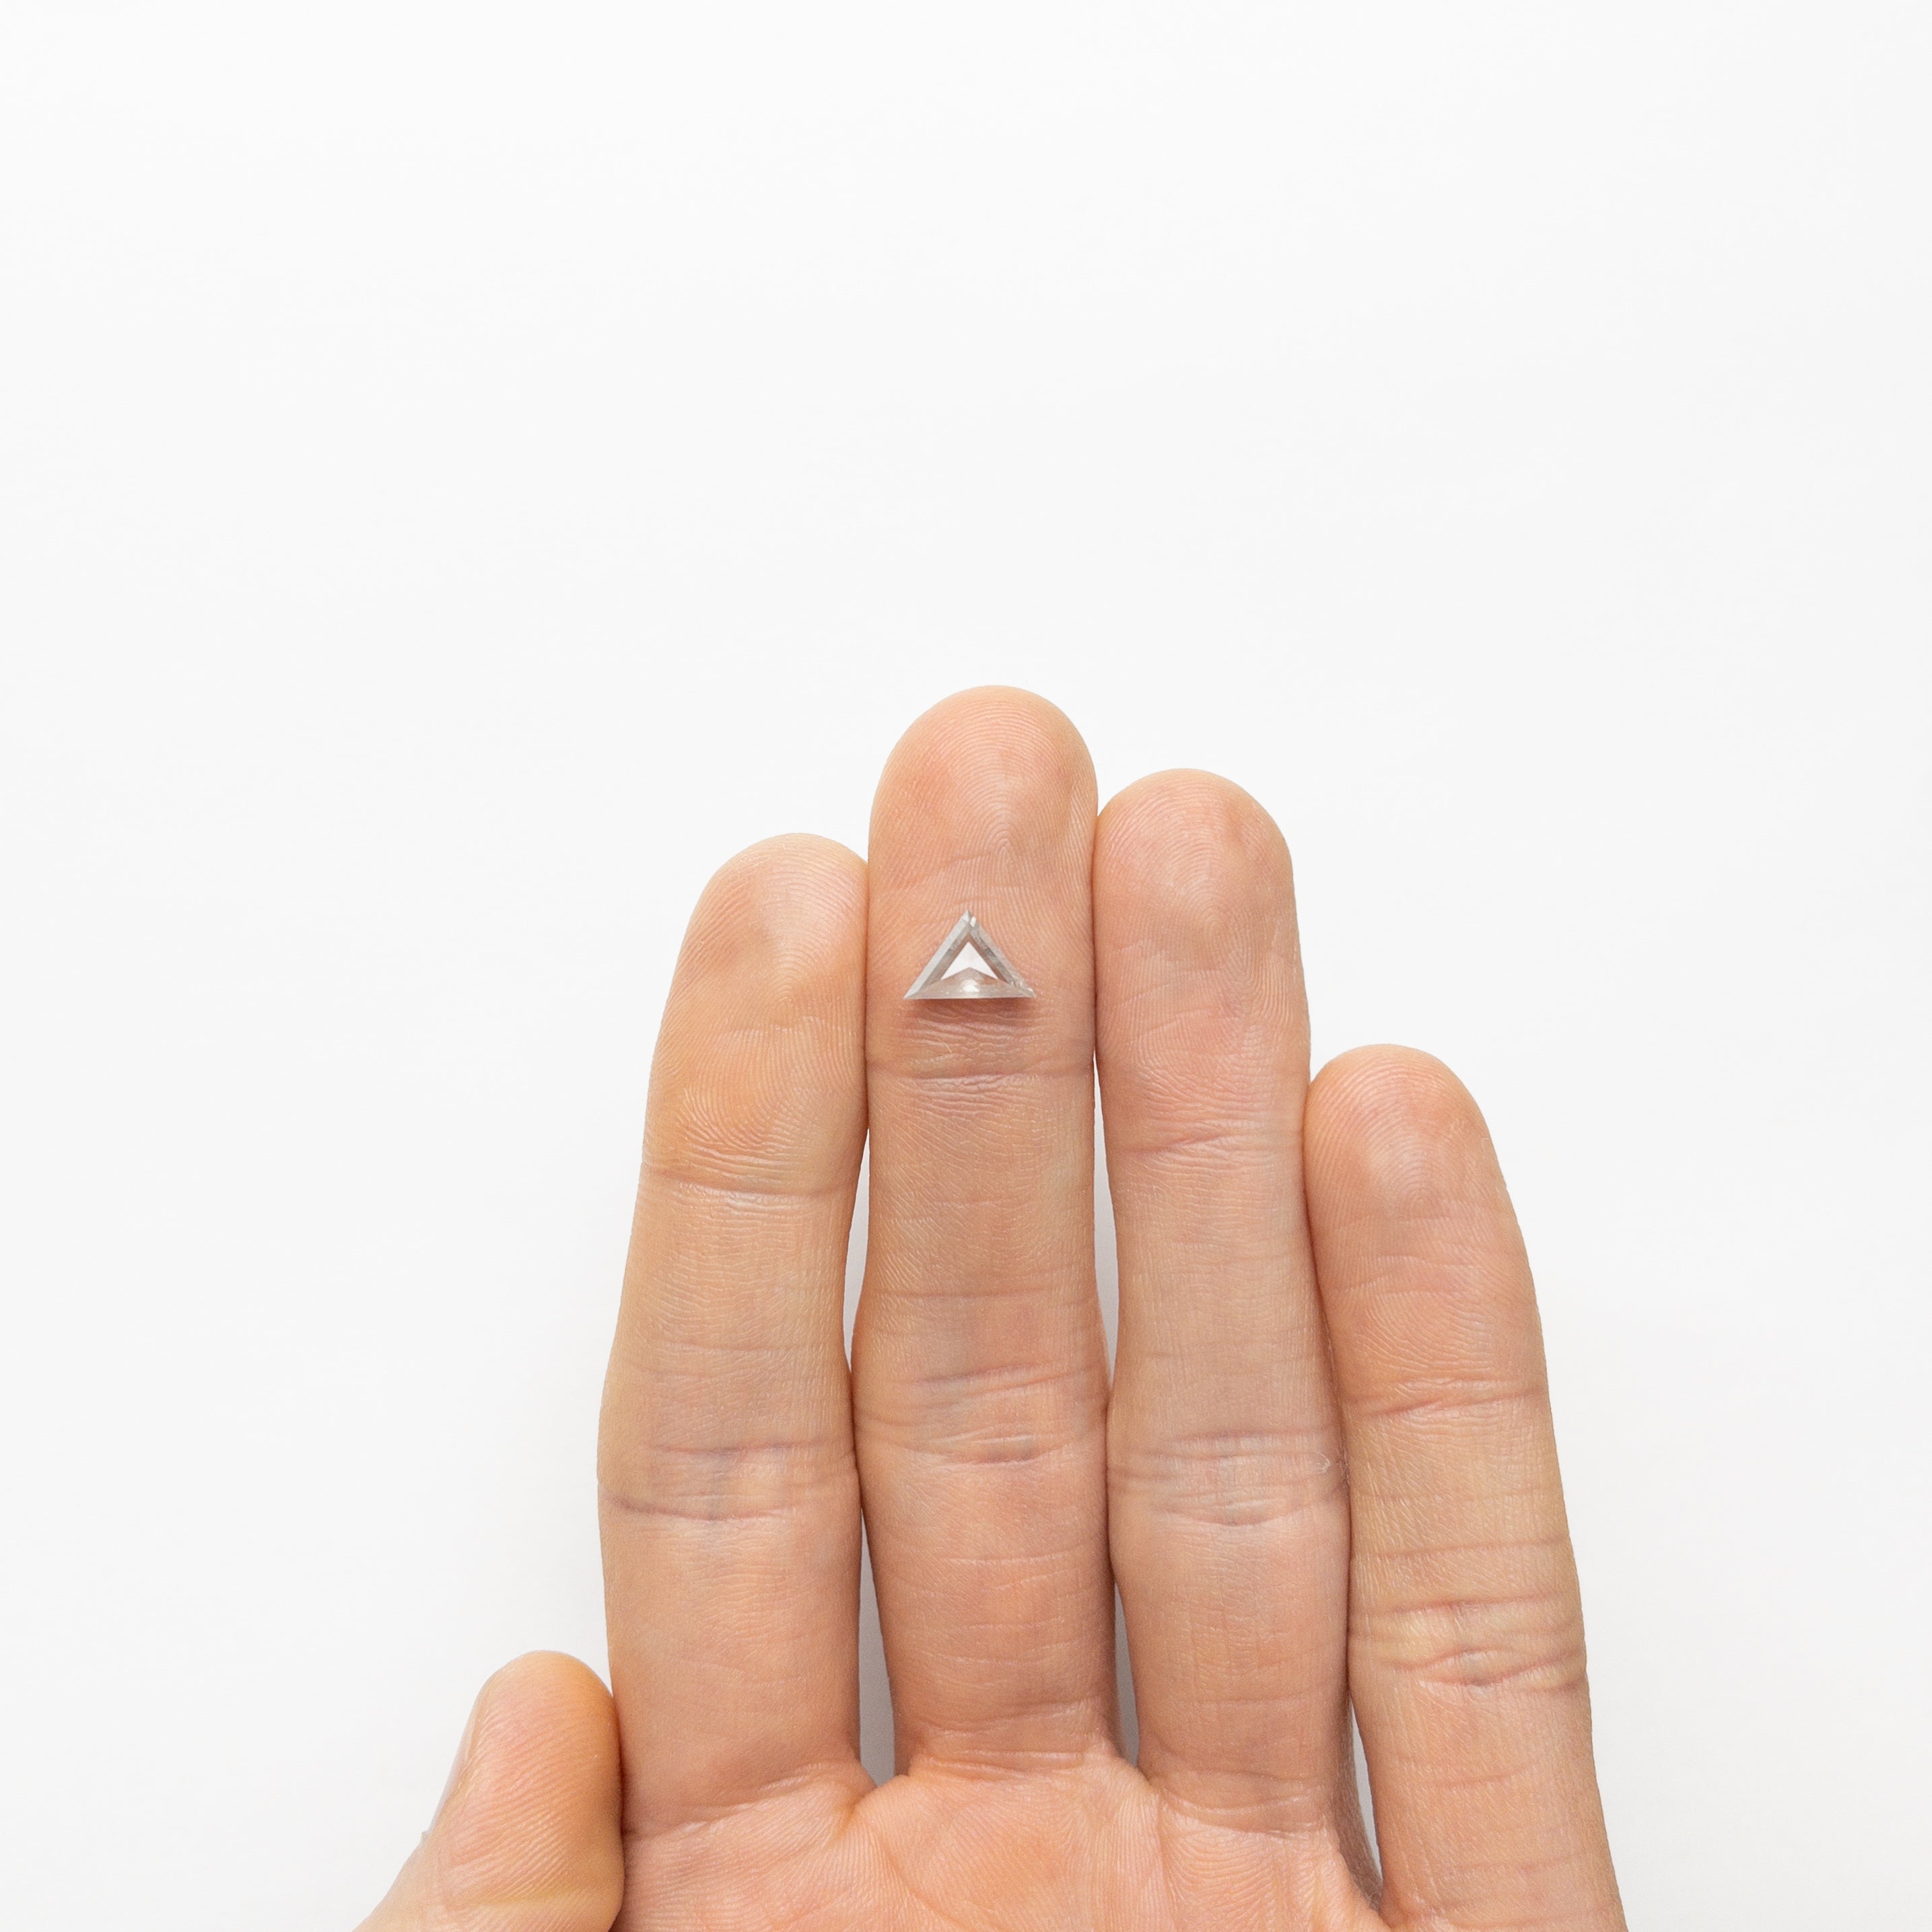 12th HOUSE loose gemstone 1.27ct Triangle Rose cut diamond